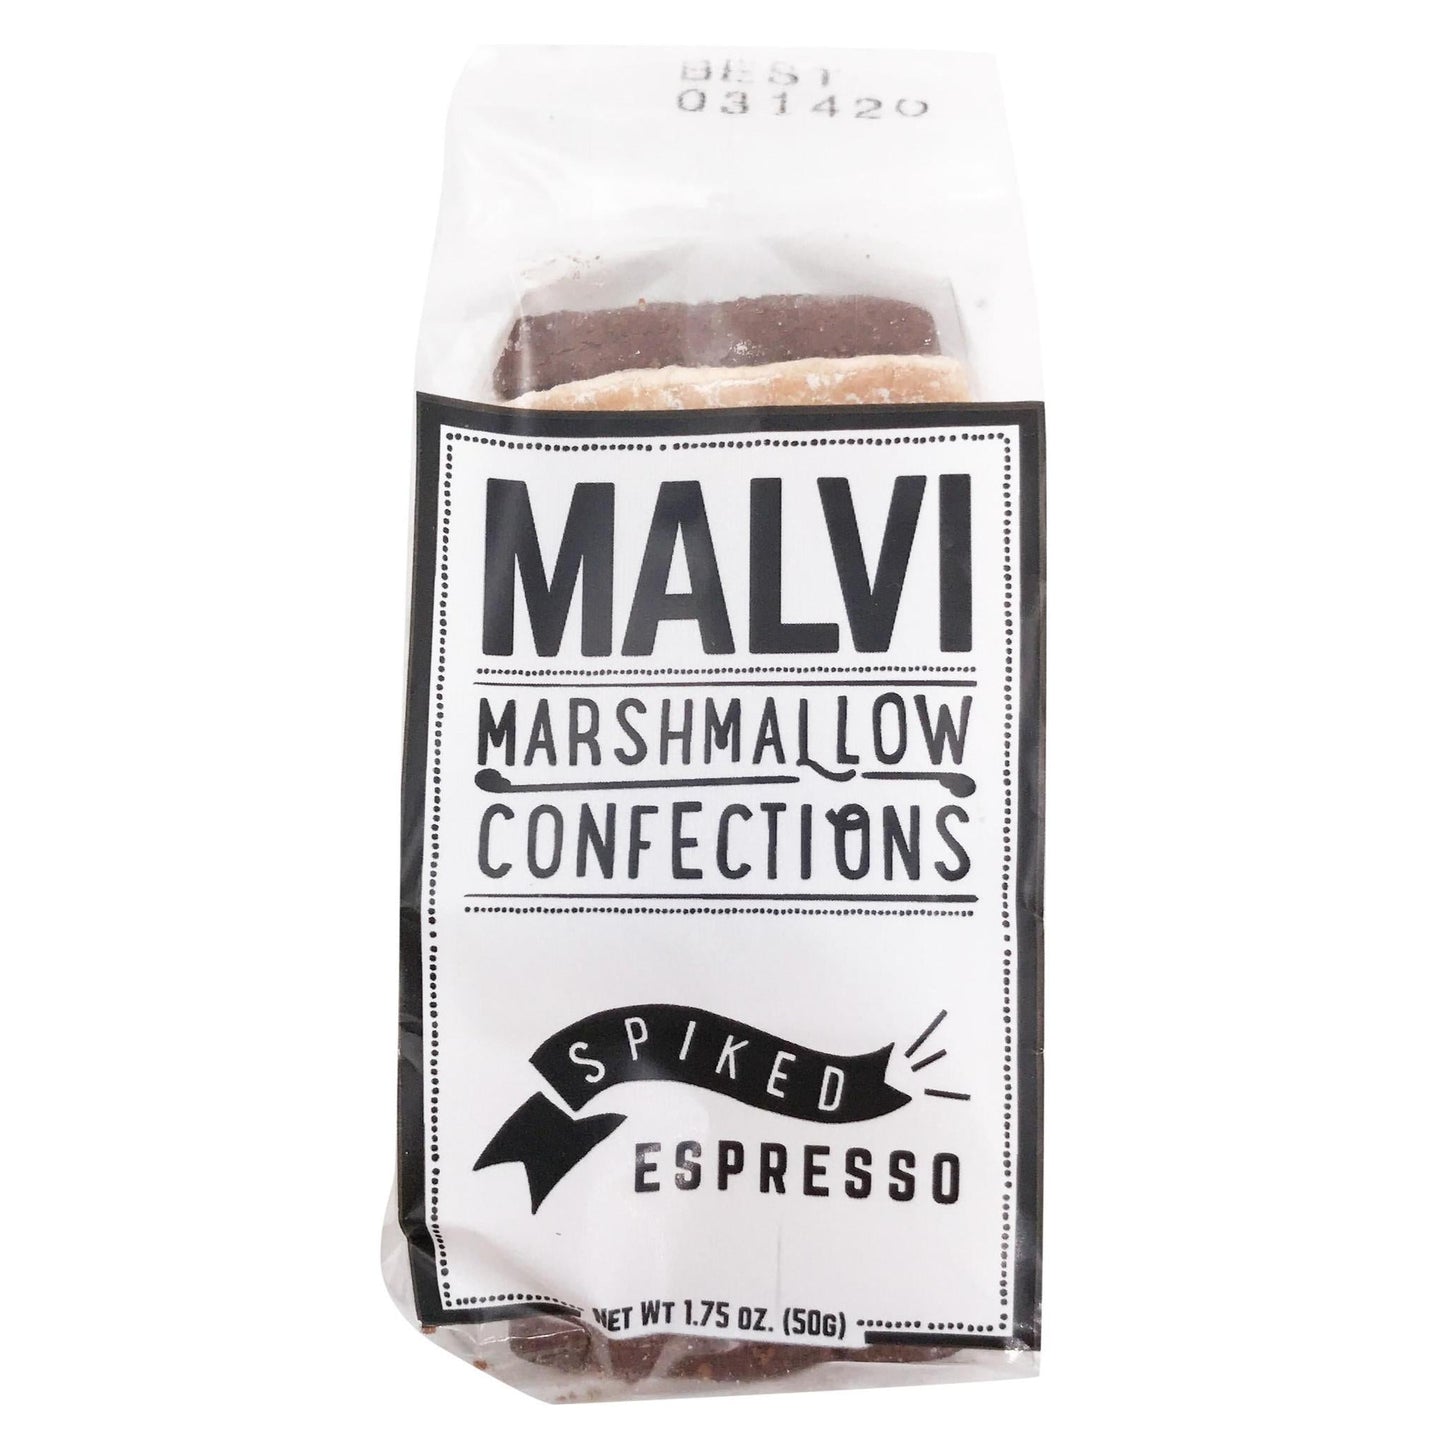 Malvi Marshmallow - 'Spiked Espresso' S'Mores (2PK) - The Epicurean Trader